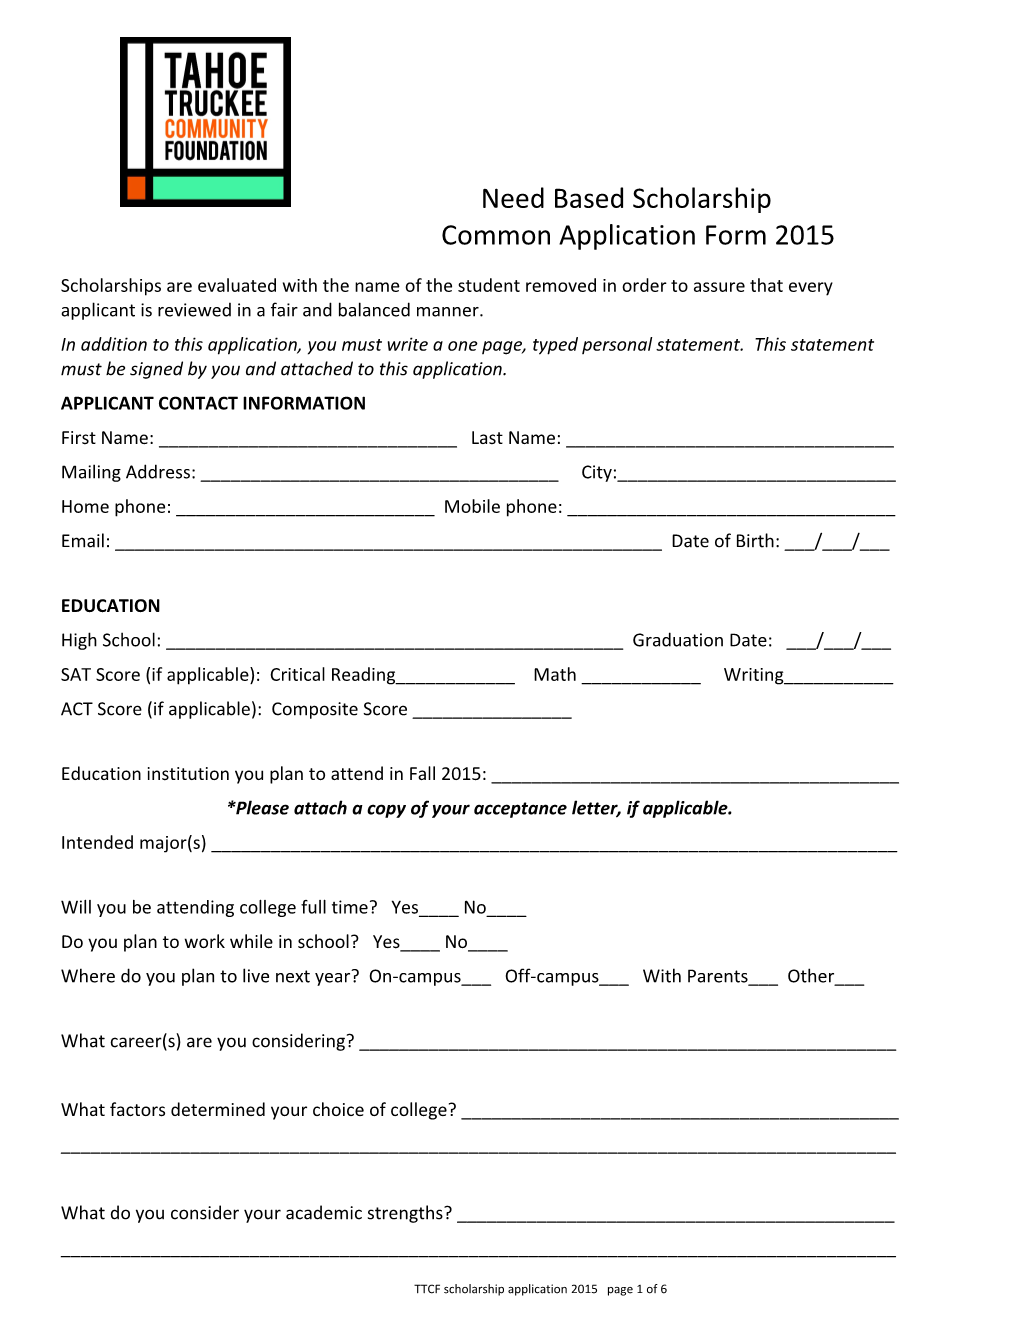 Tahoe Truckee Community Foundation Need Based Scholarship Common Application Form 2011